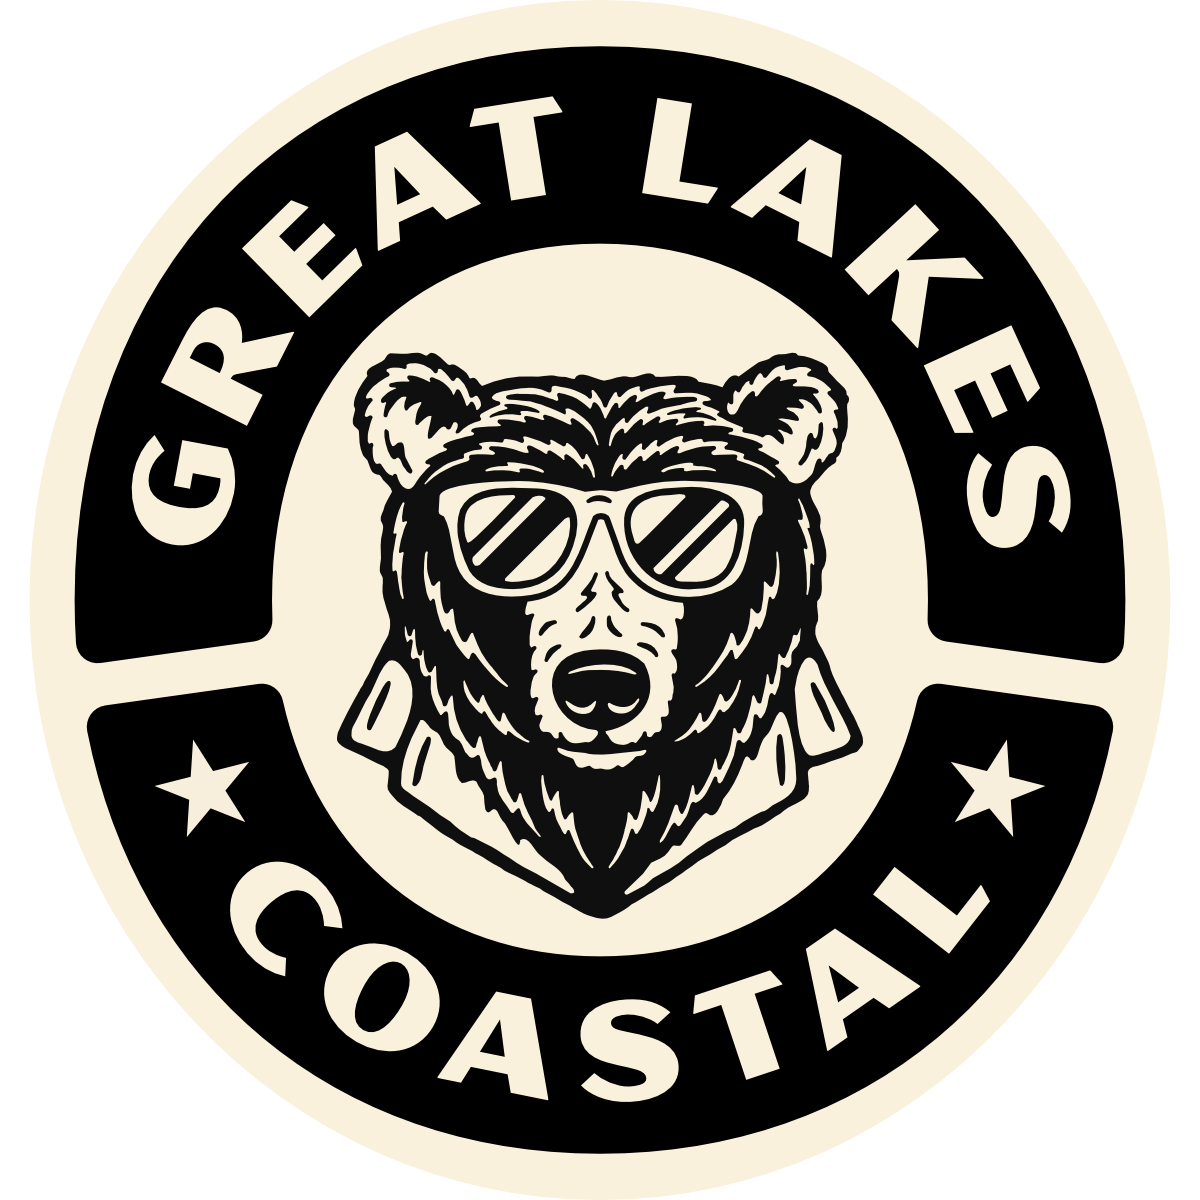 Great Lakes Coastal